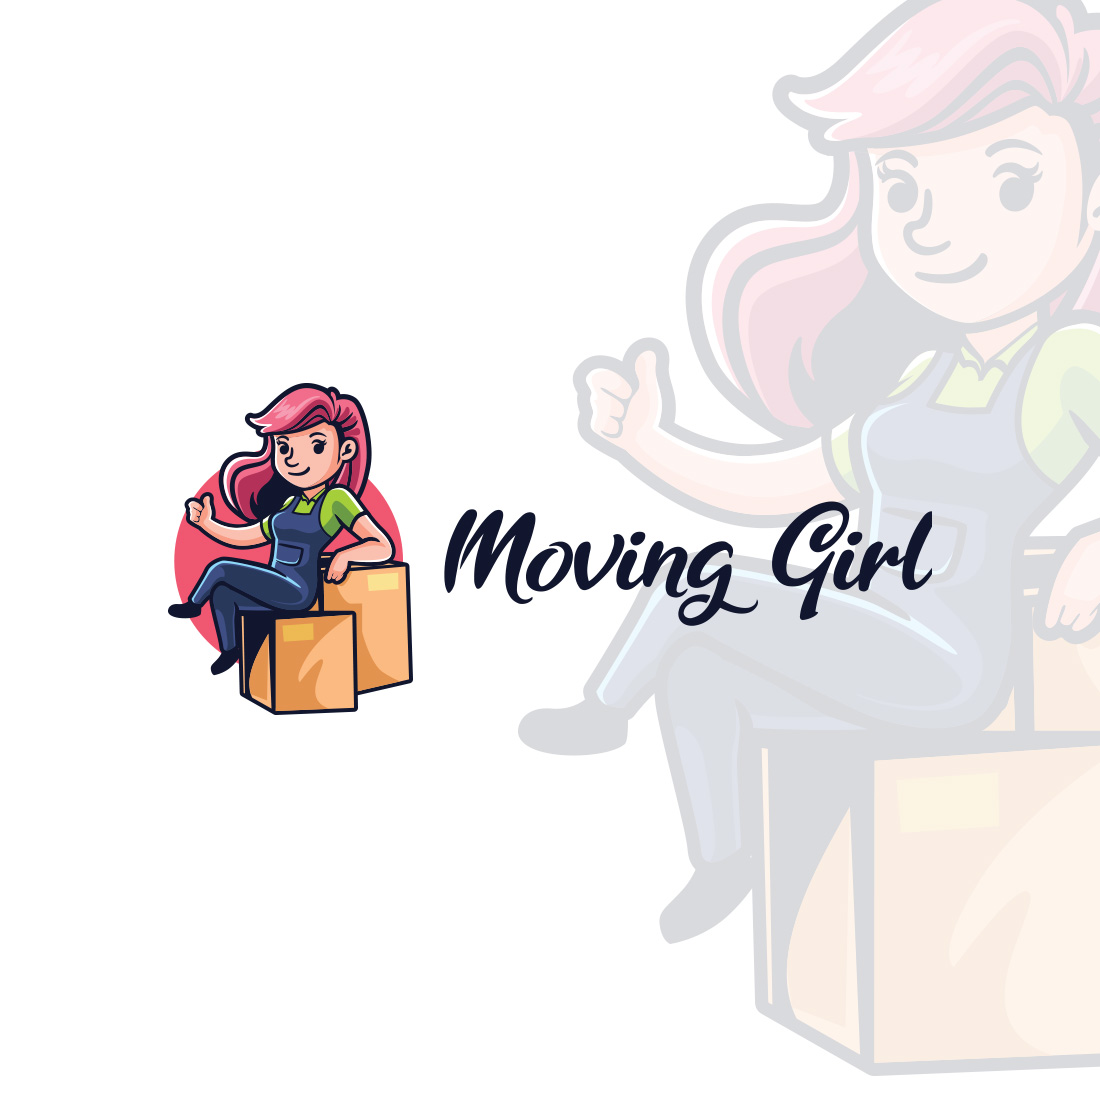 Move Girl Character Mascot Logo Design cover image.